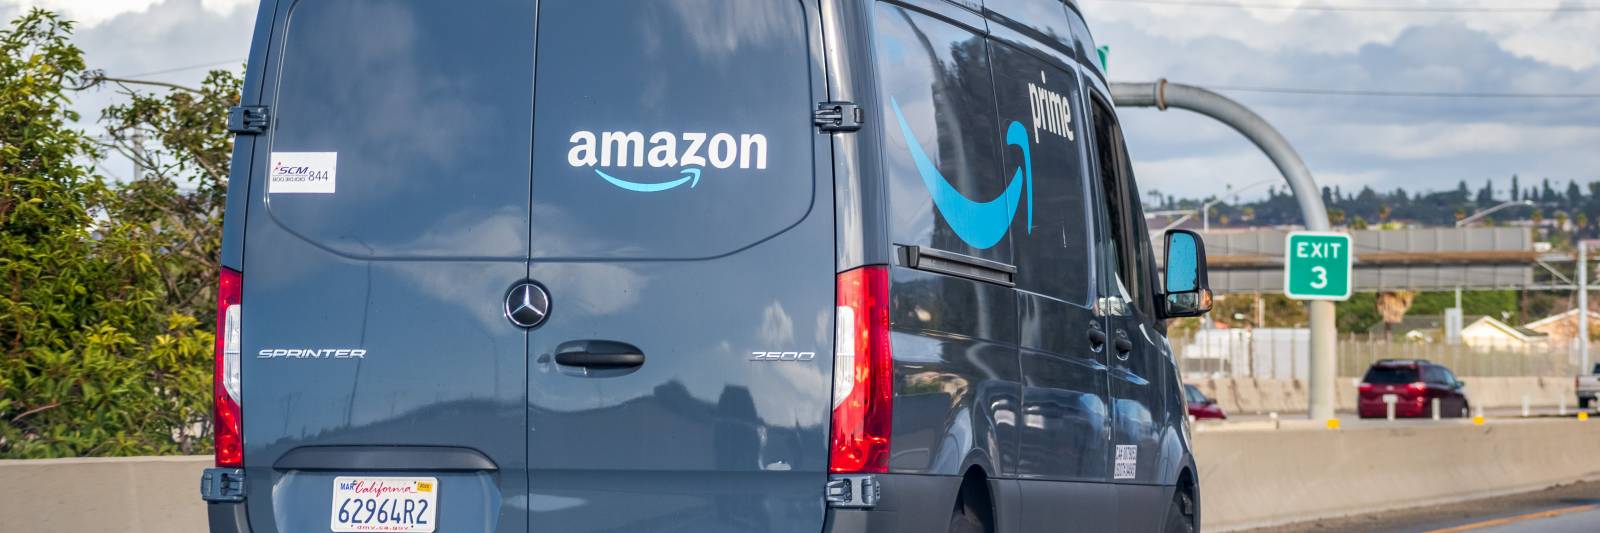 Senators Question The Privacy Of Cameras In Amazon Delivery Vans